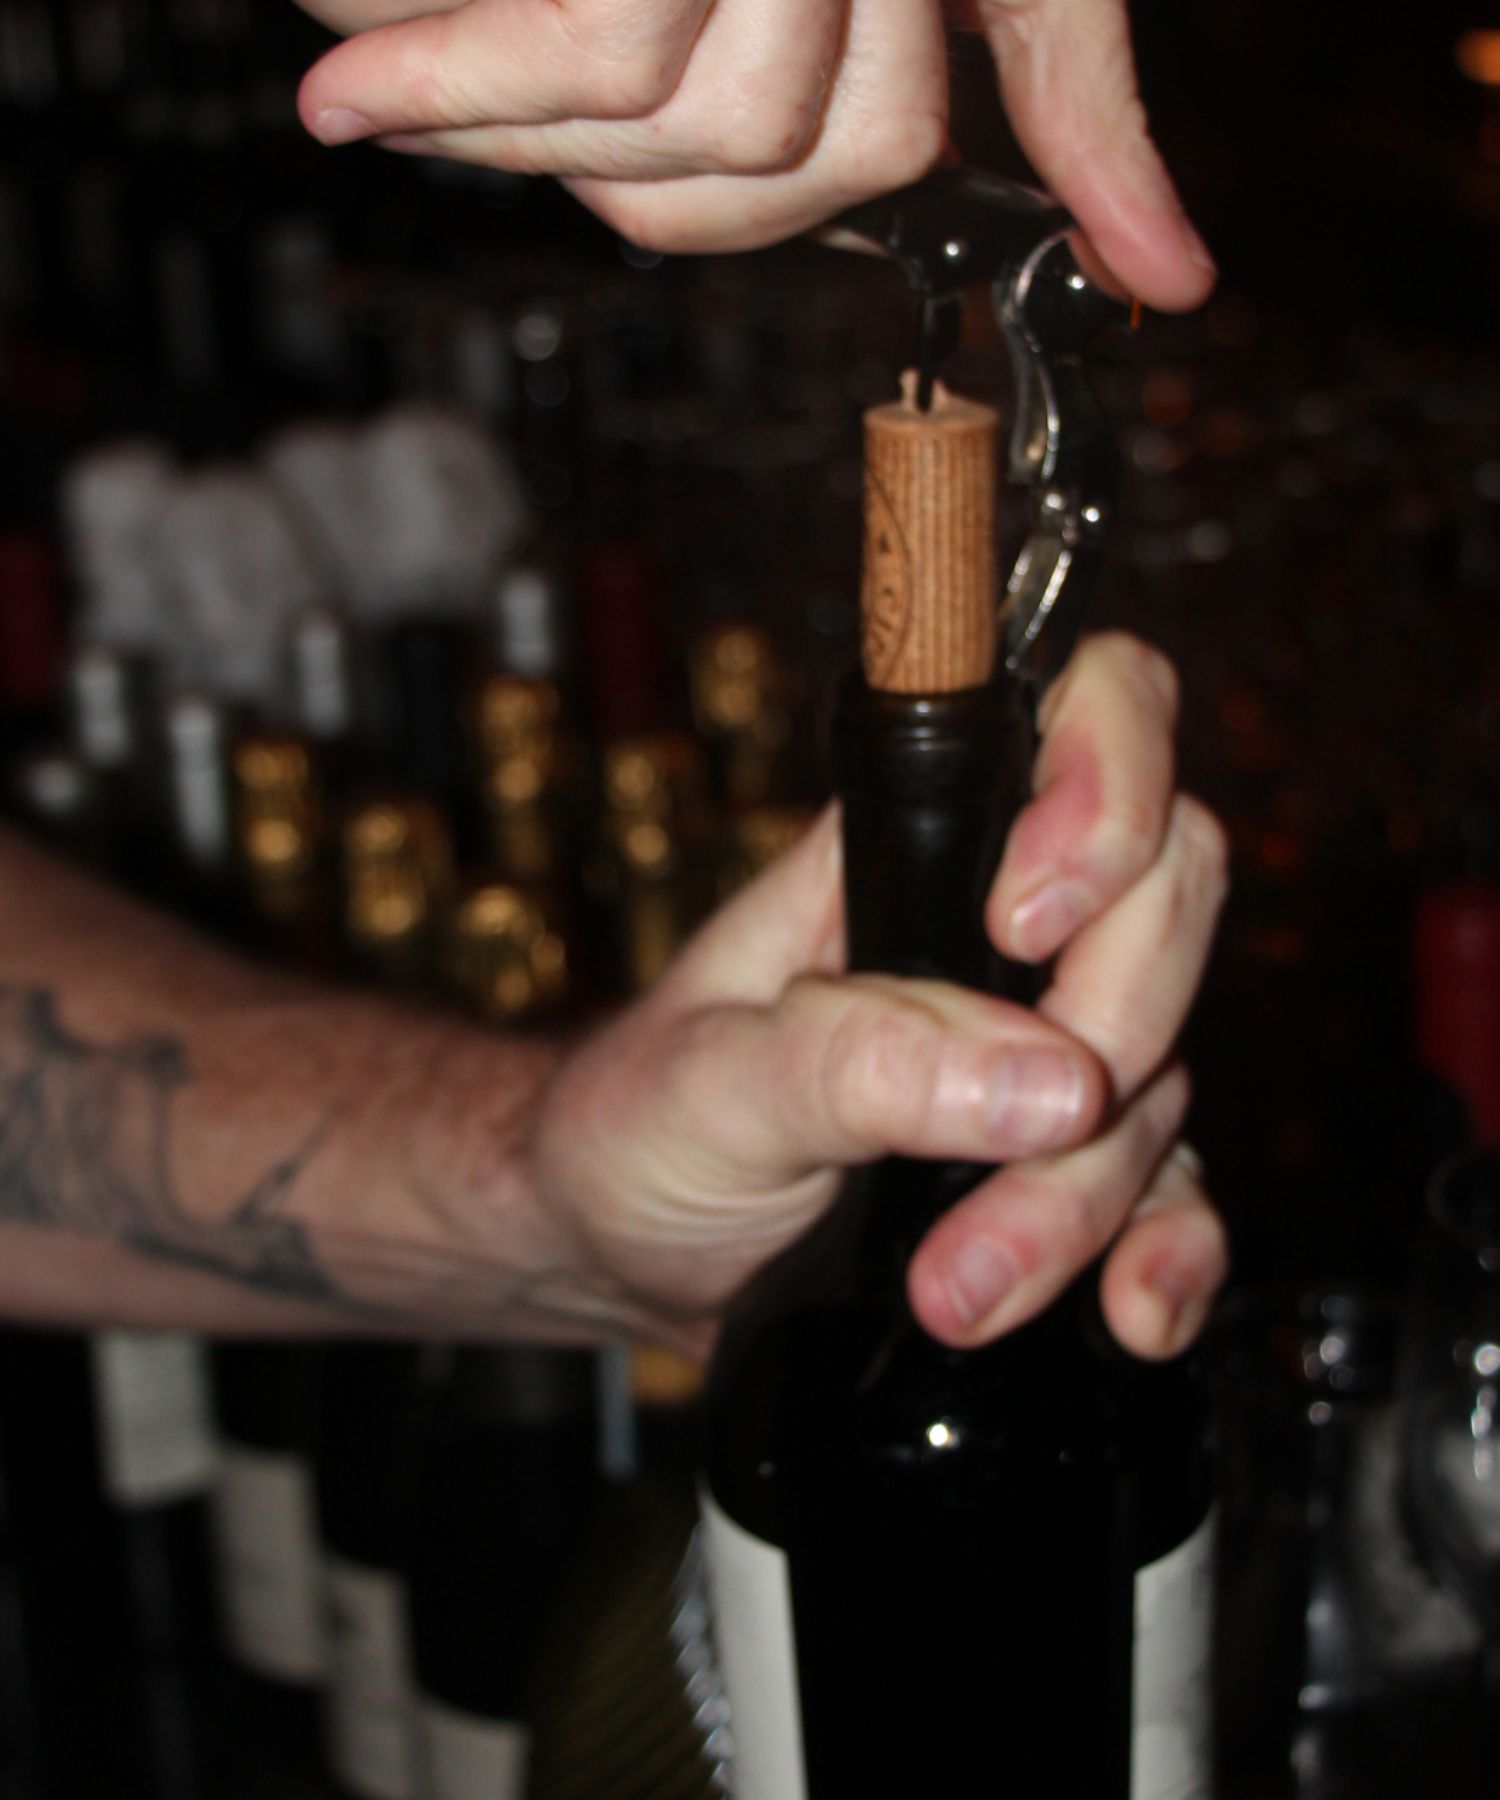 Server opening a wine bottle